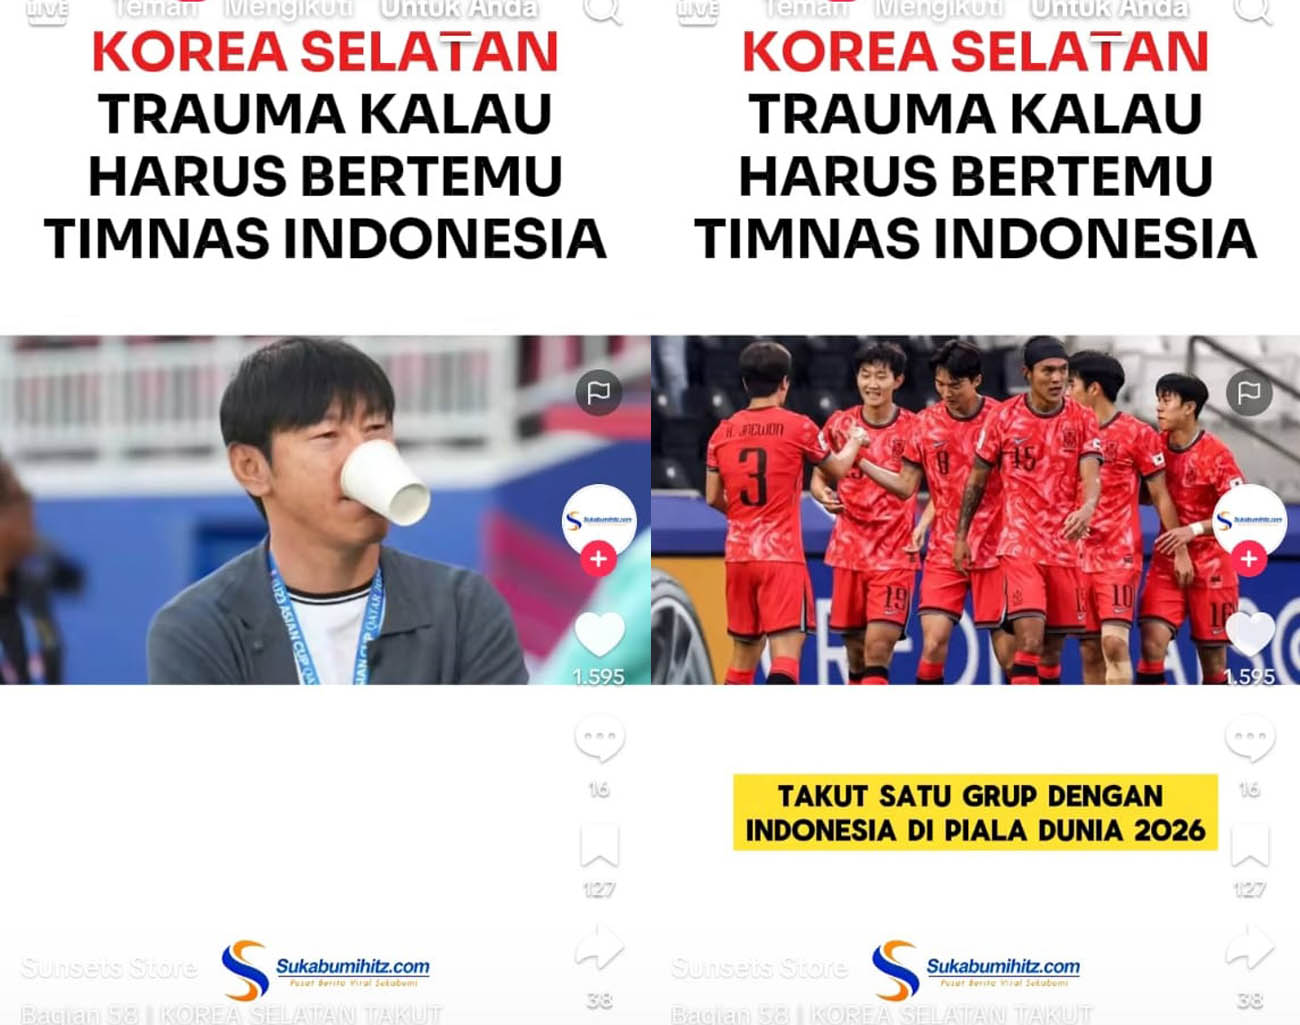 Korea Selatan Trauma Bertemu Indonesia, Shin Tae Young Senang, Ronde 3 Kualifikasi Piala Dunia 2026